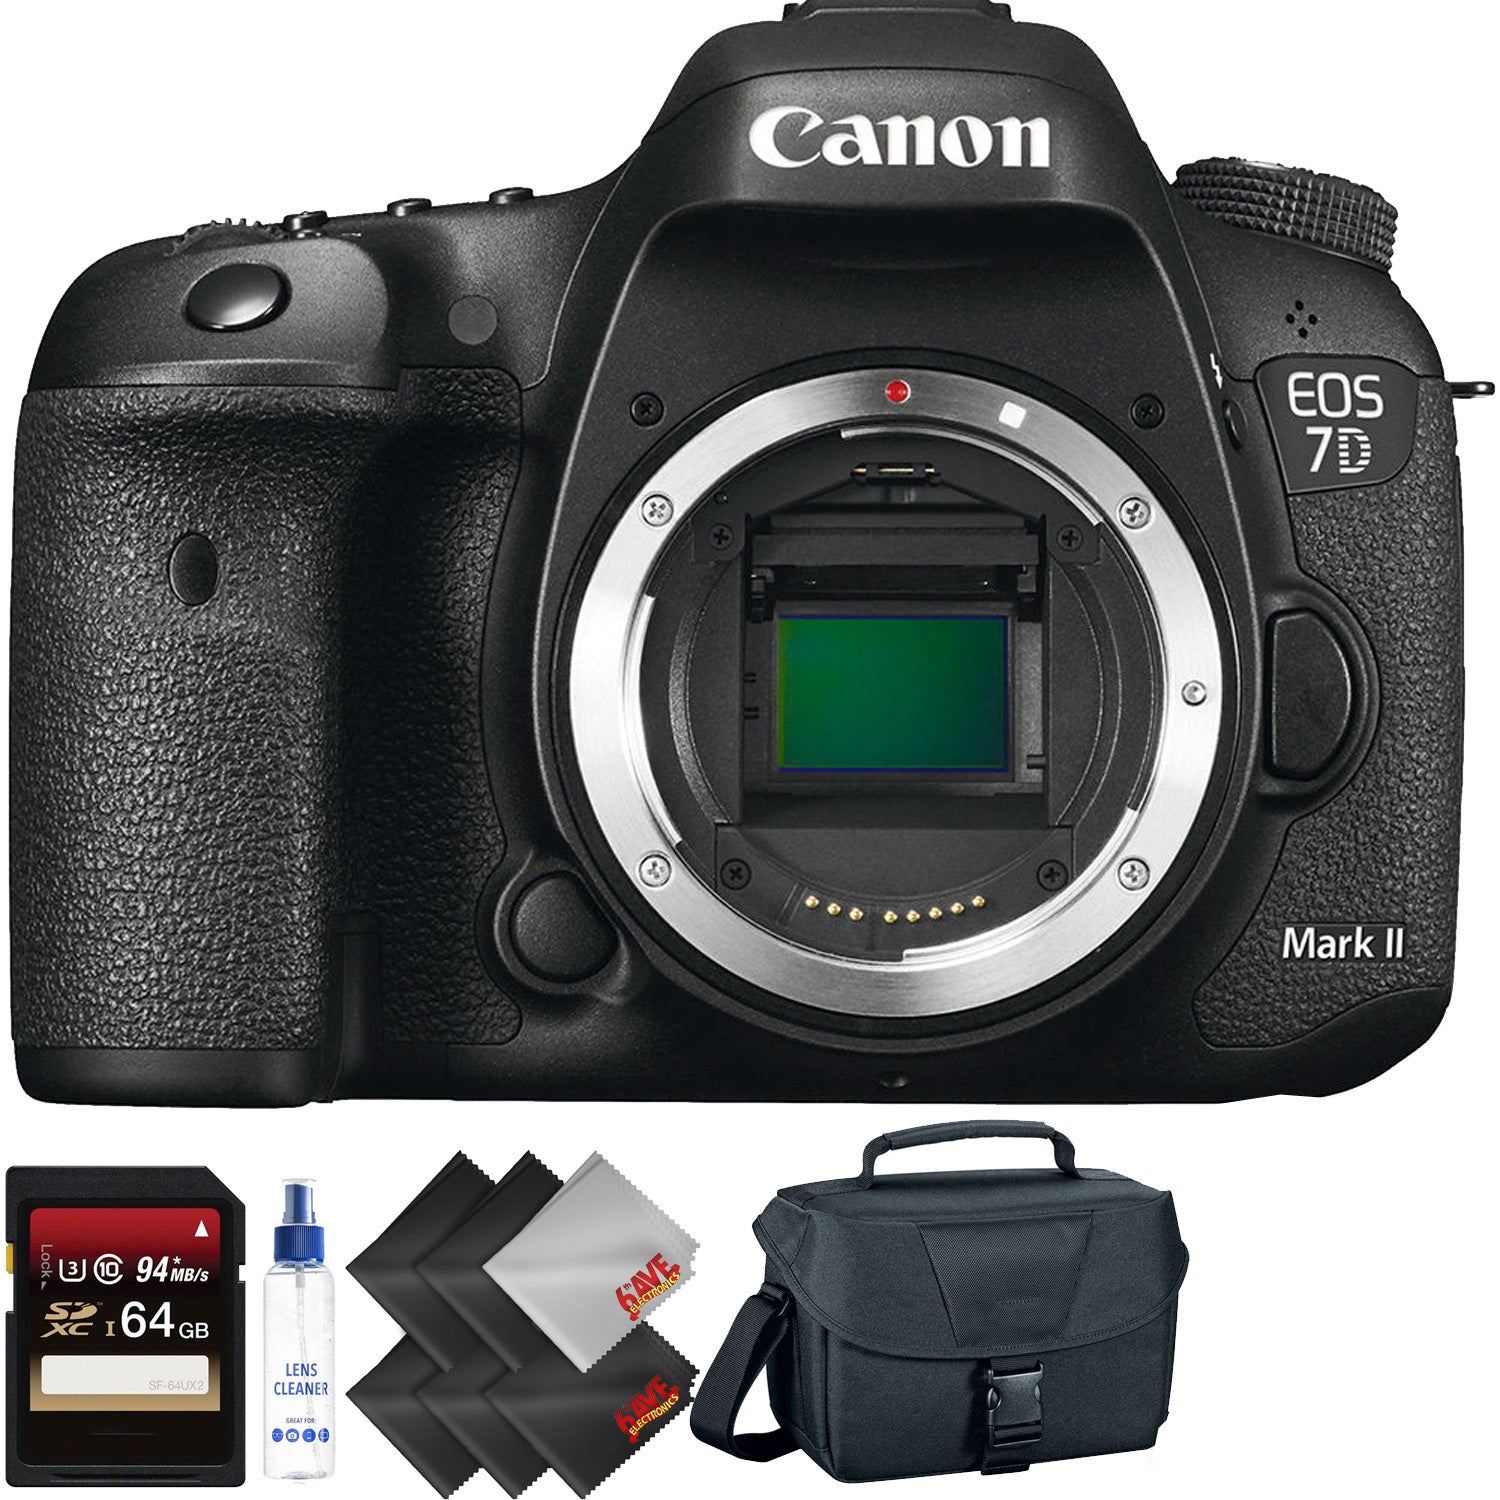 Canon EOS 7D Mark II DSLR Camera (Body Only) + 64GB Memory Card + 1 Year Warranty